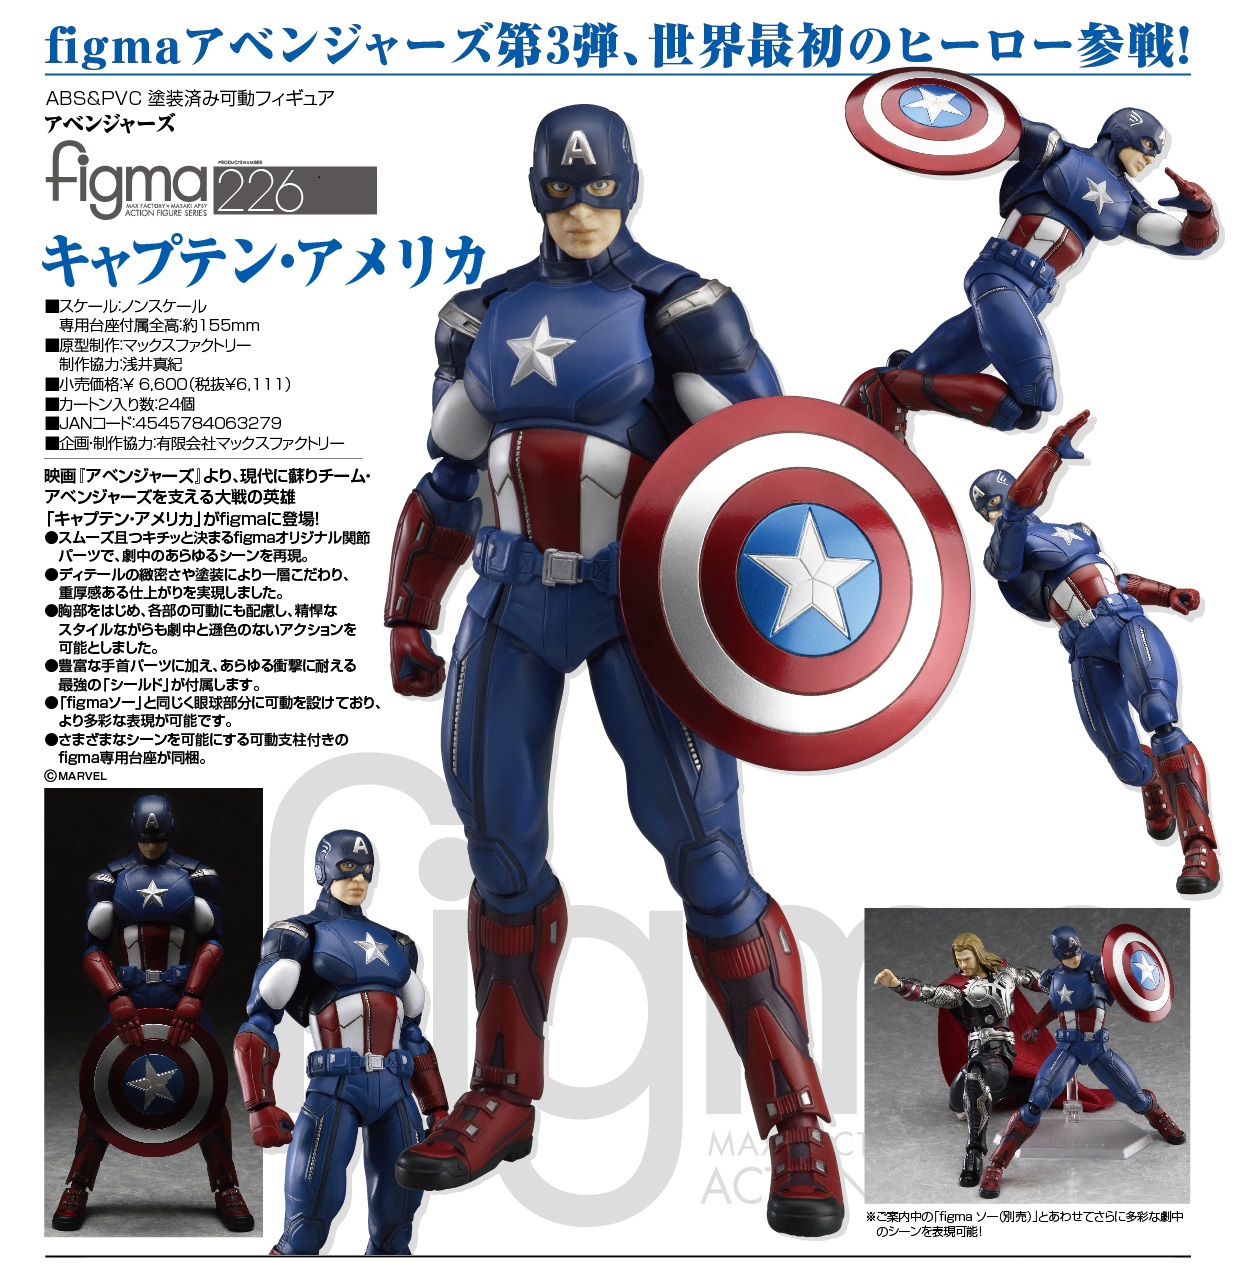 MAXFACTORY 2014年9月20日發售: figma 『The Avengers』 Captain